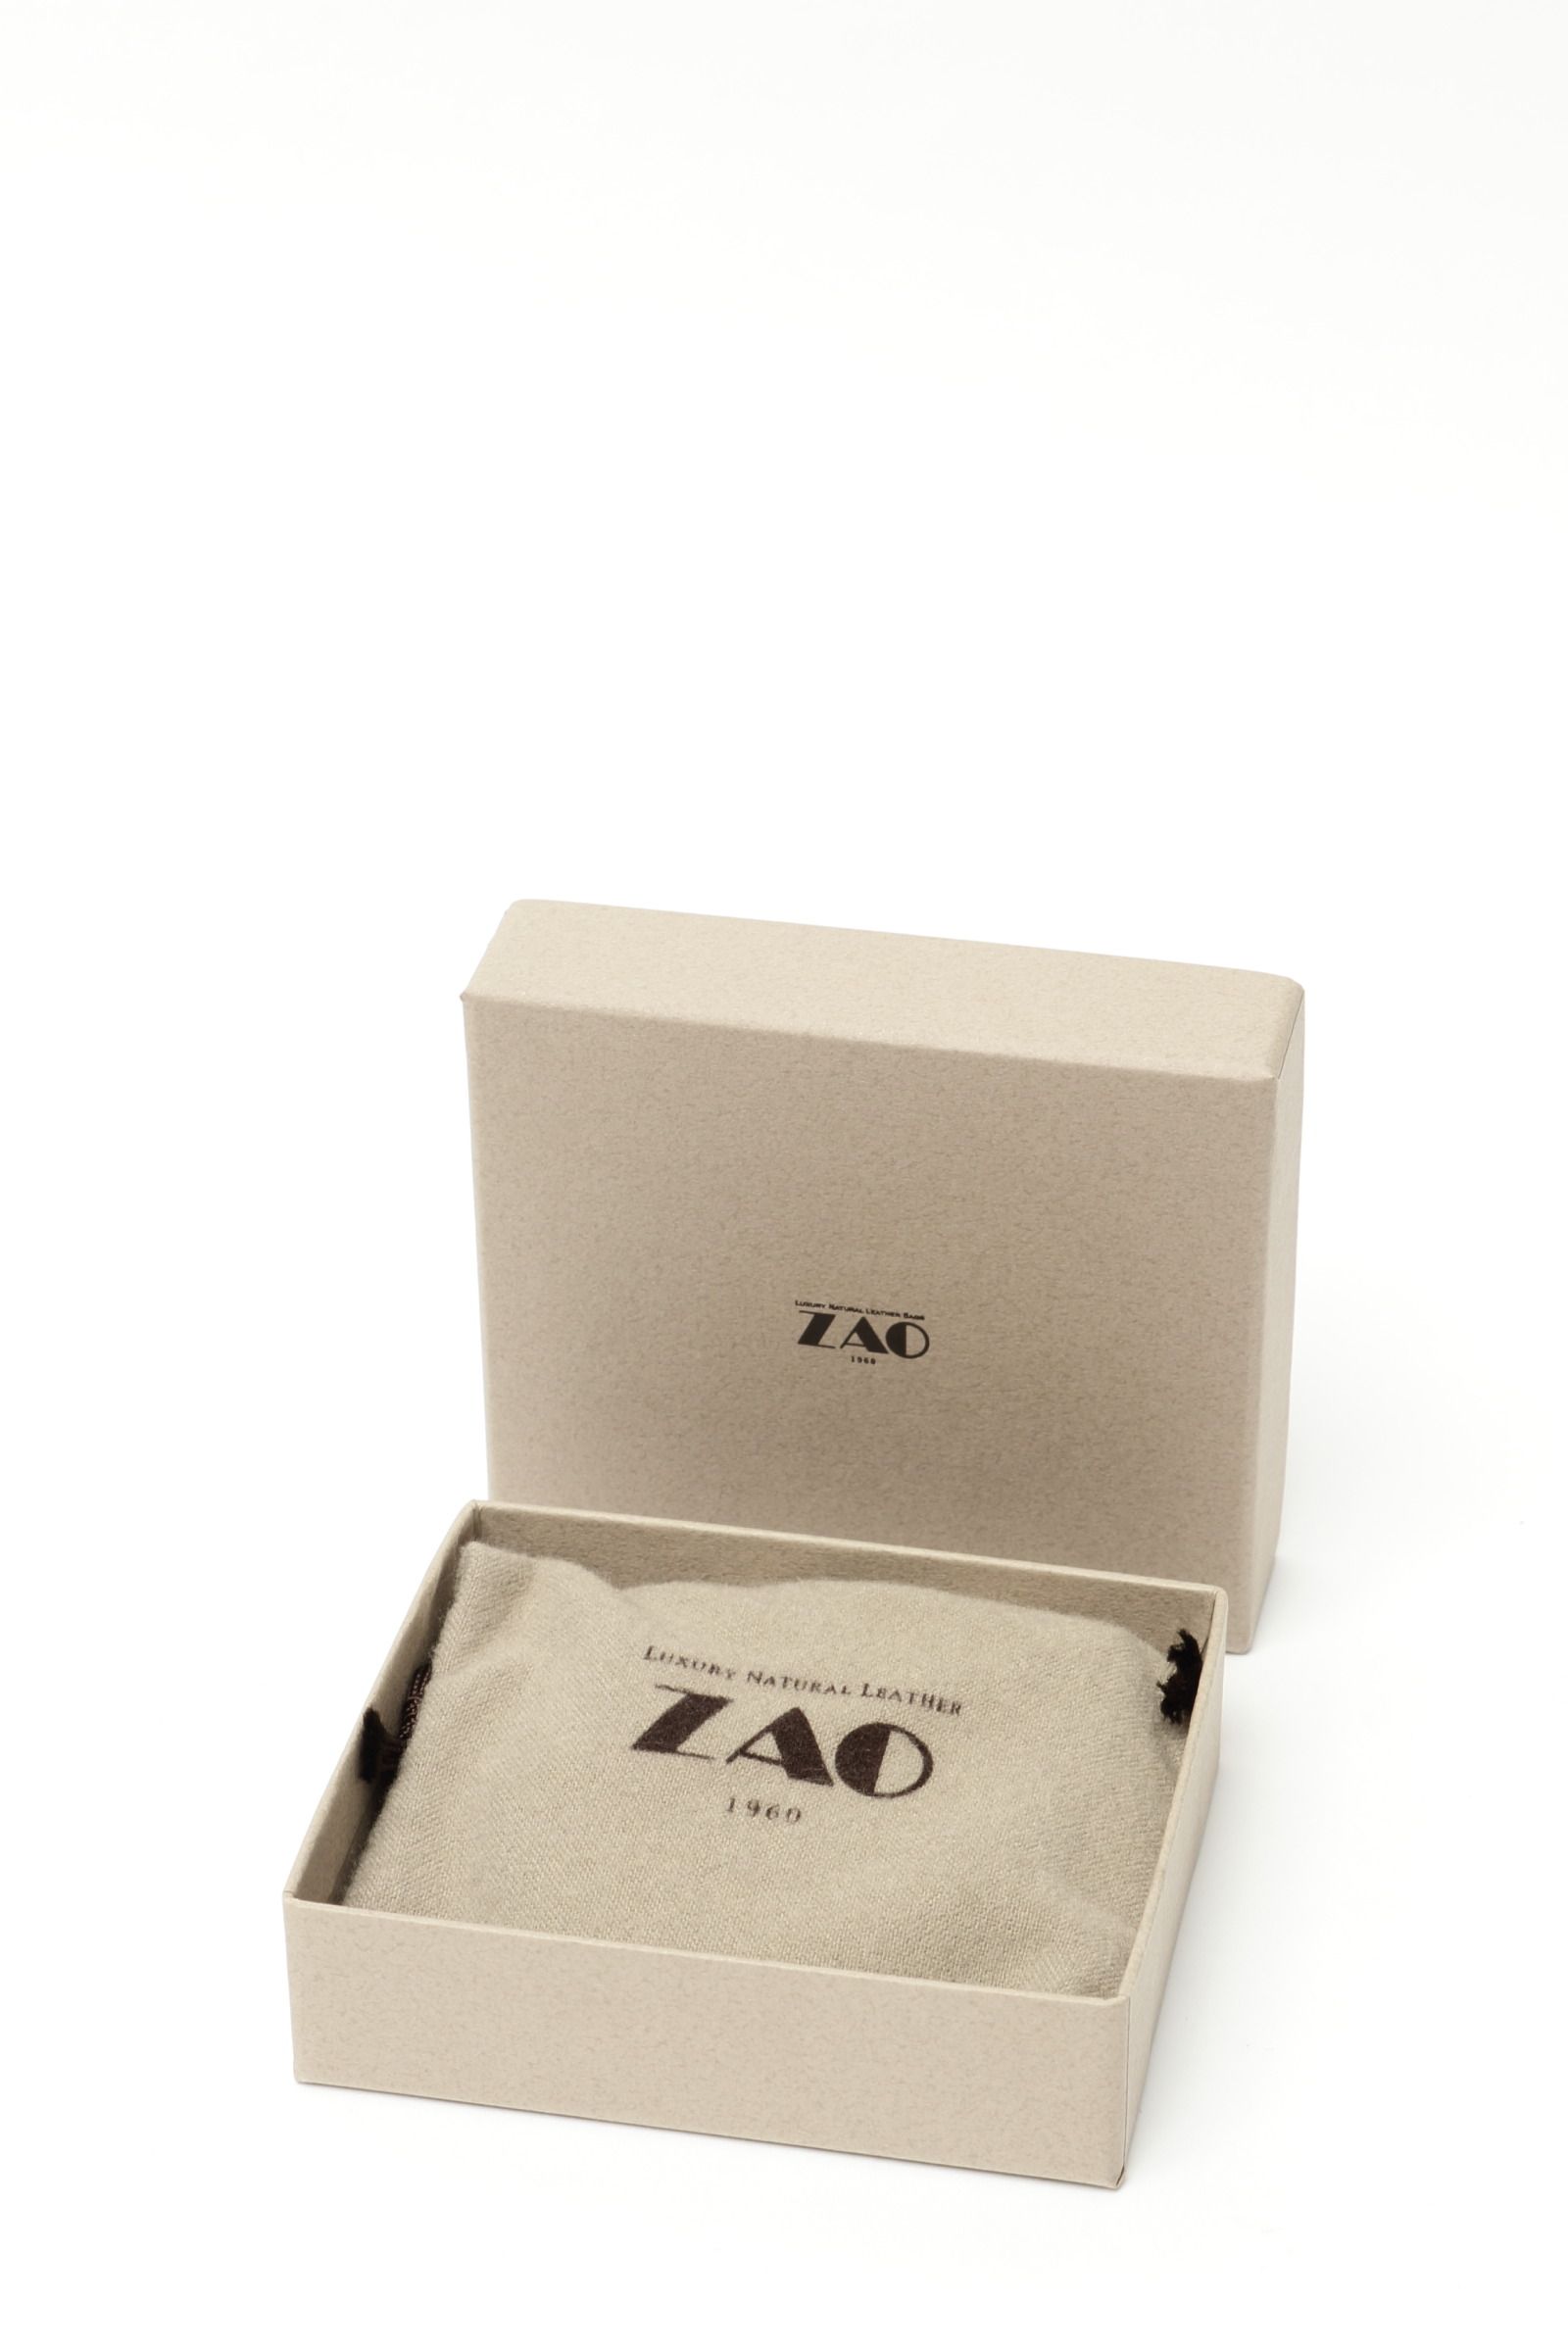 ZAO - マットラージクロコ カードケース (スマートウォレット